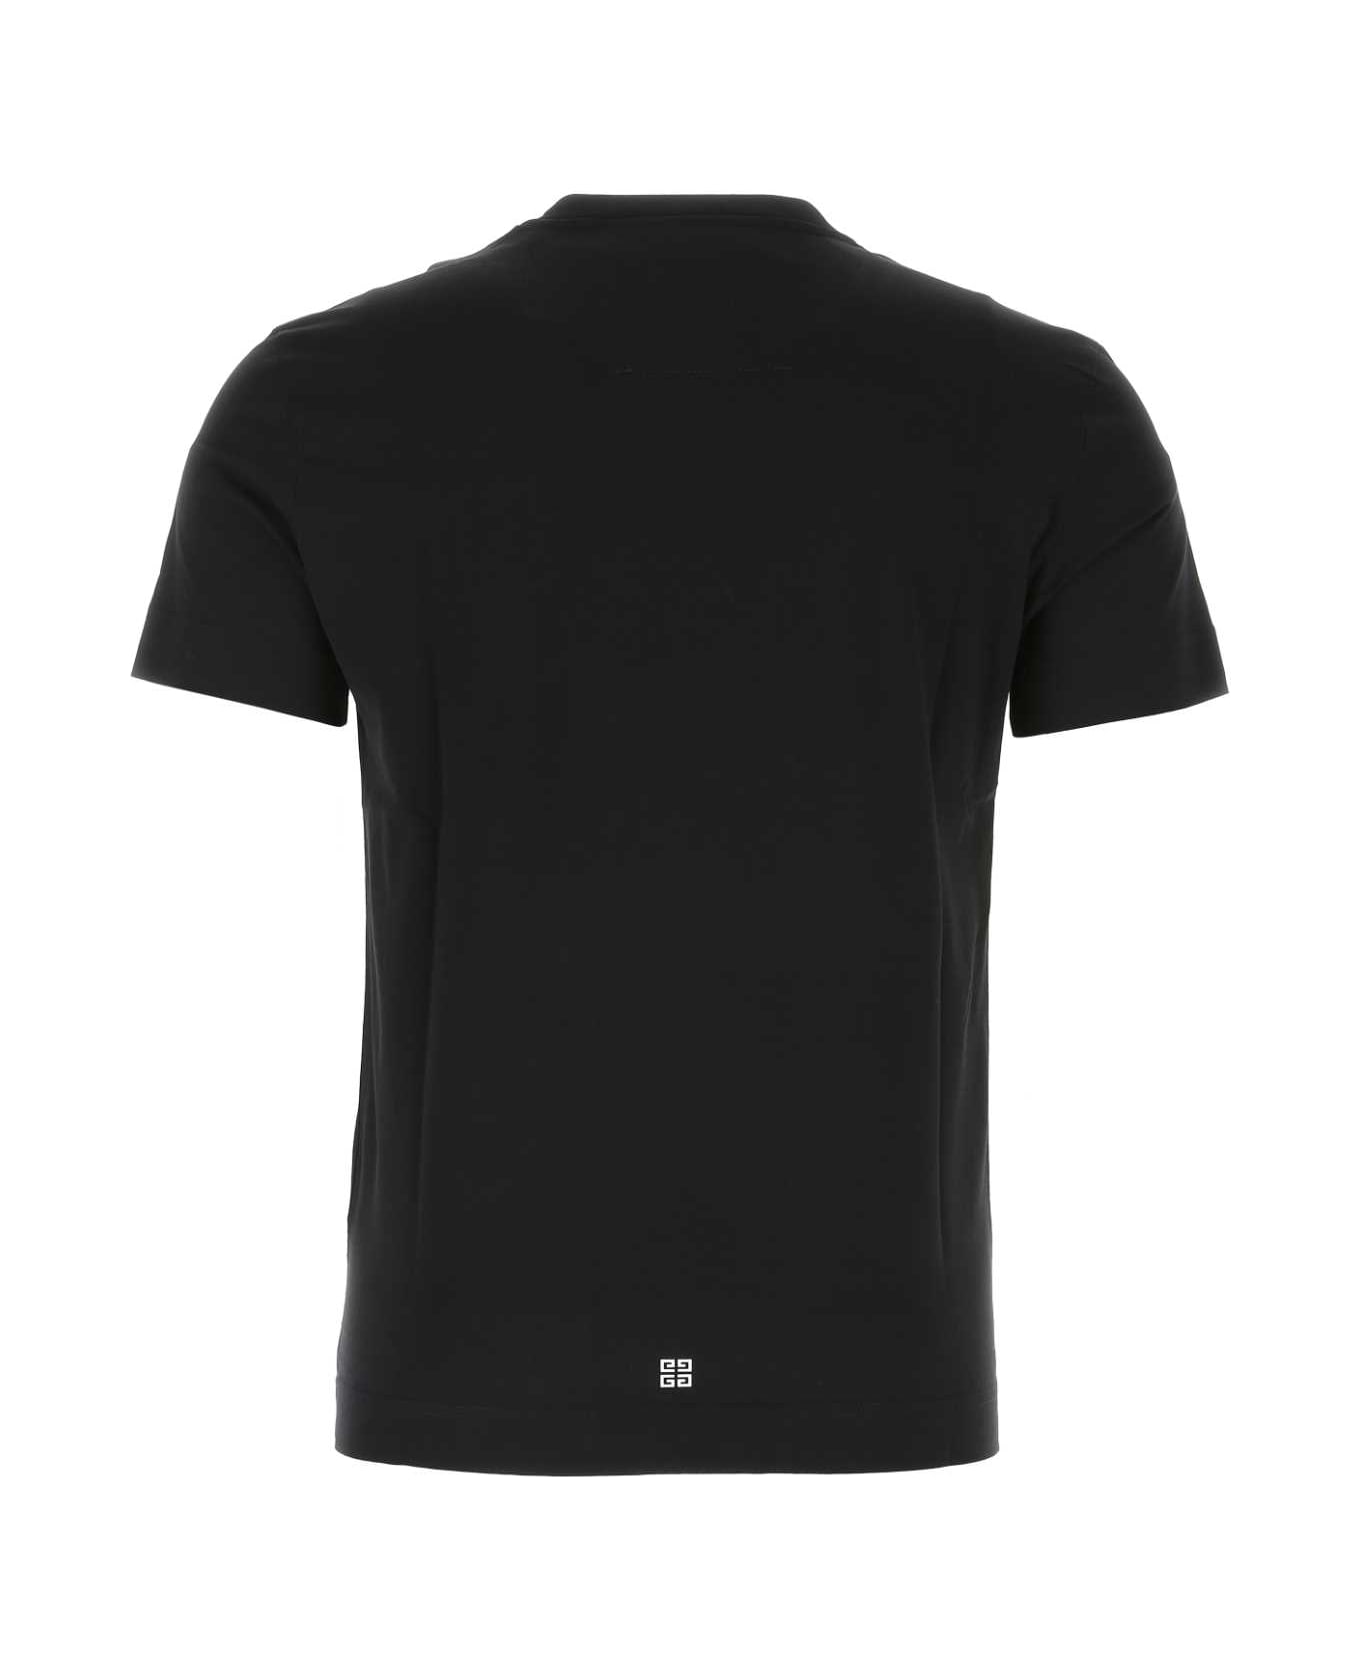 Givenchy Black Cotton T-shirt - 001